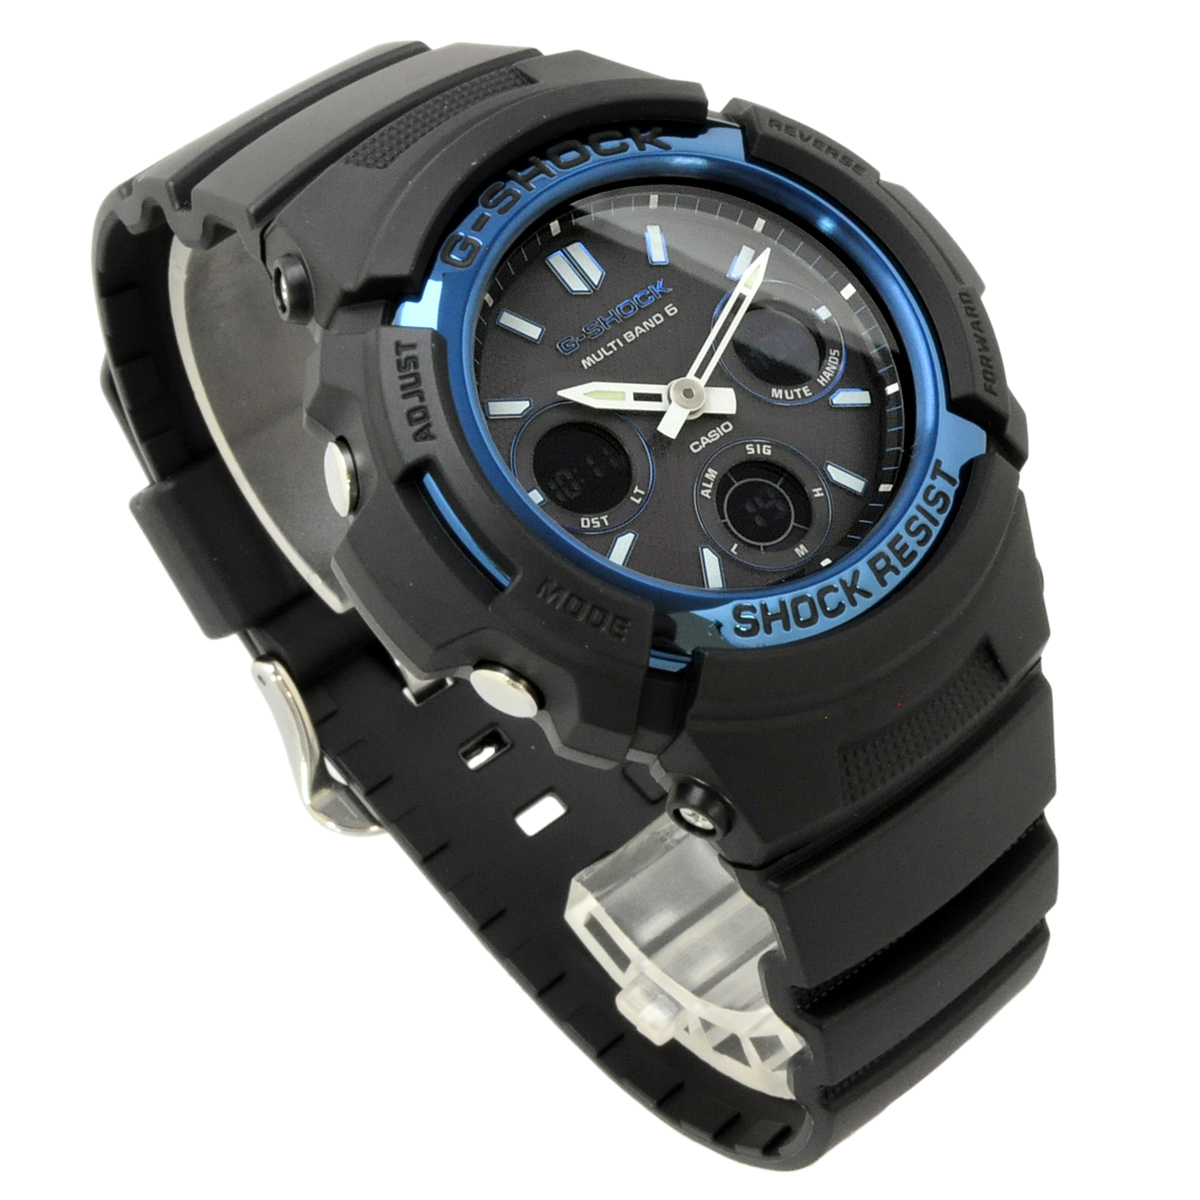 CASIO Casio wristwatch men's G-SHOCK G shock foreign model radio wave solar multiband 6 AWG-M100A-1A